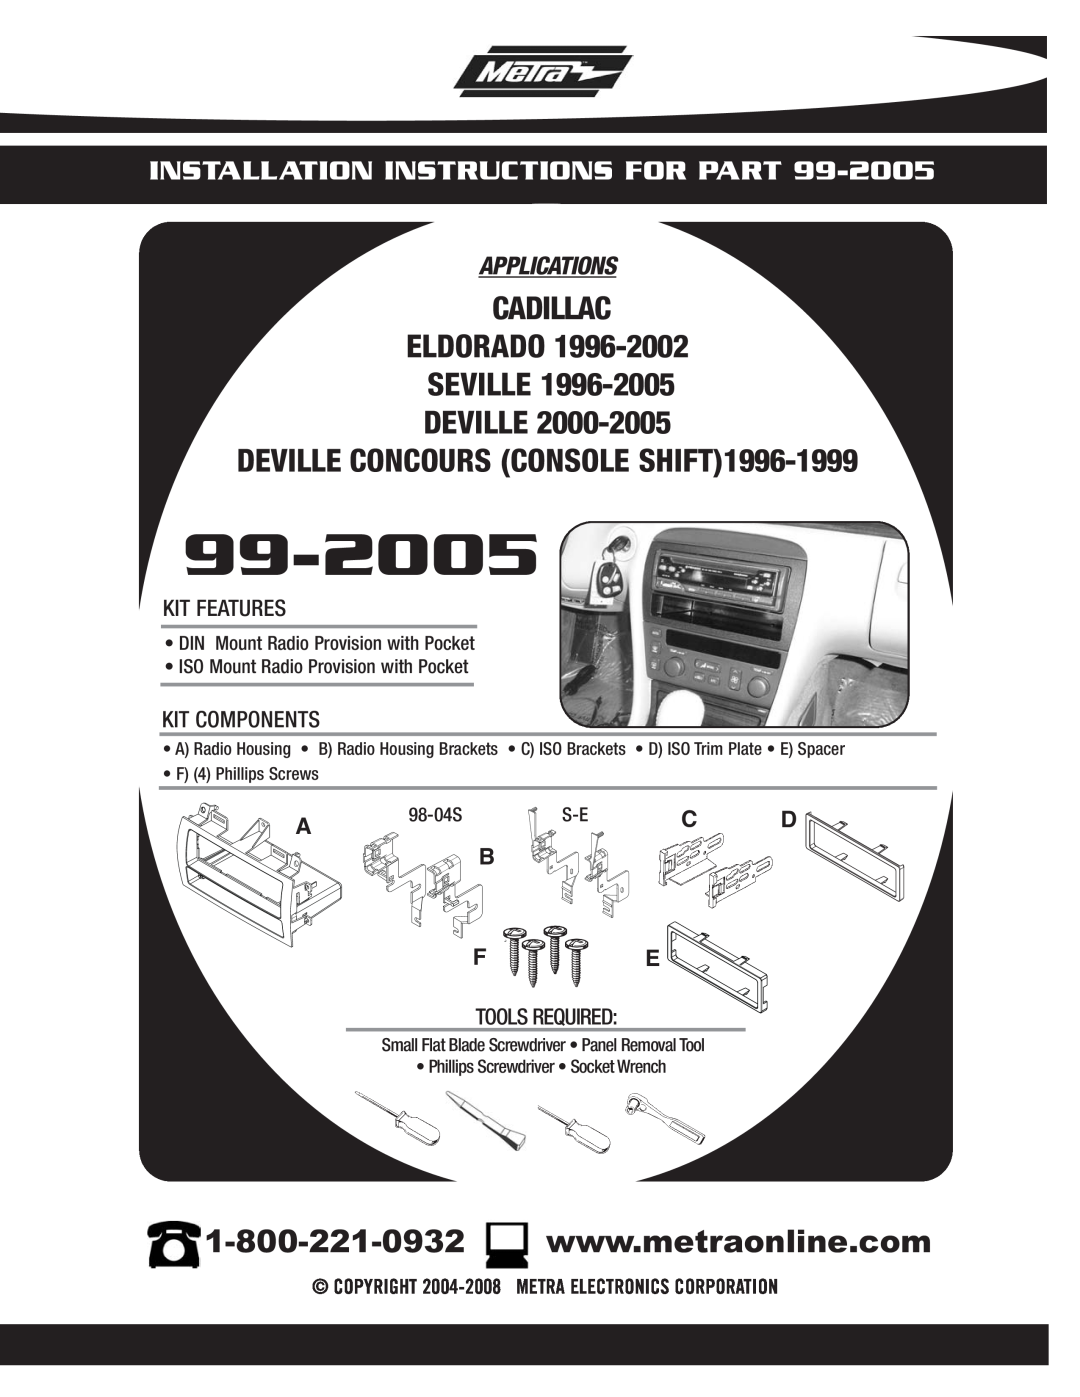 Metra Electronics 99-2005 installation instructions Applications, Cadillac Eldorado Seville Deville, Kit Features, 98-04S 